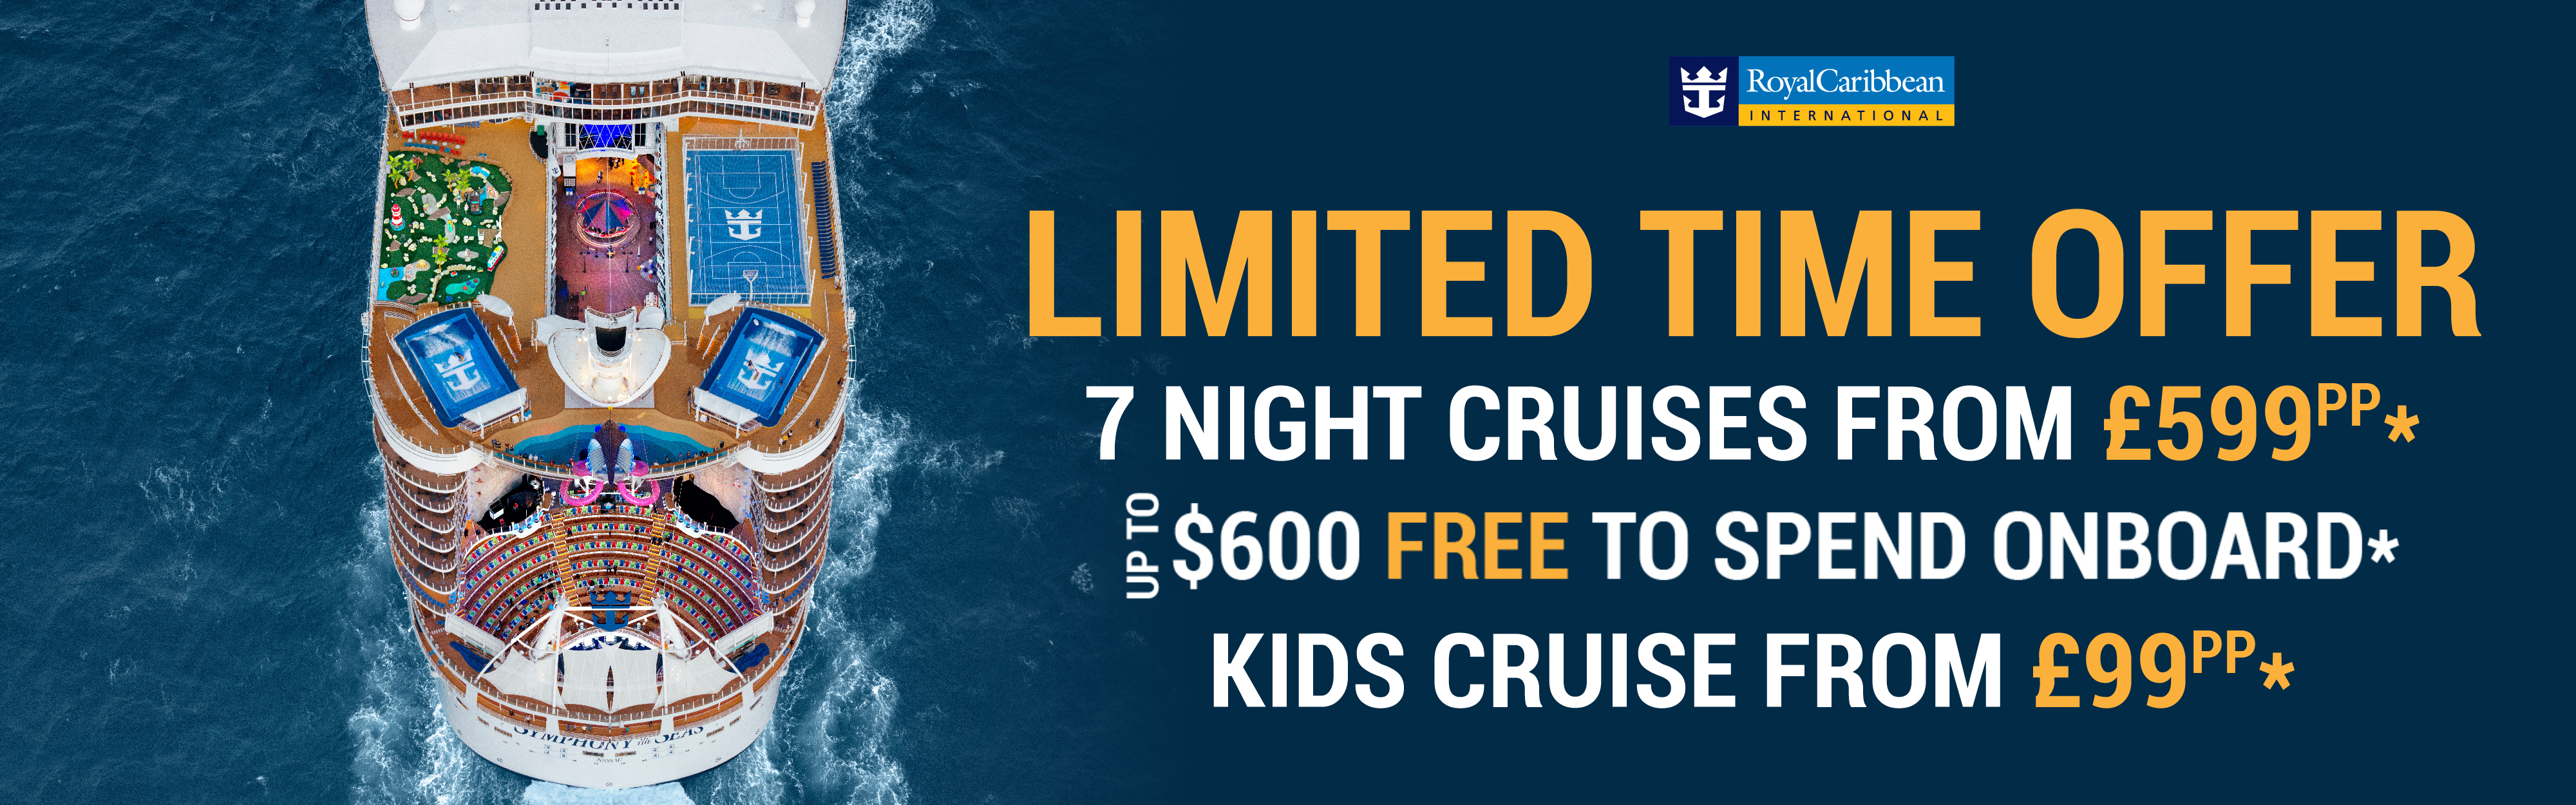 Royal Caribbean Cruises Campaign